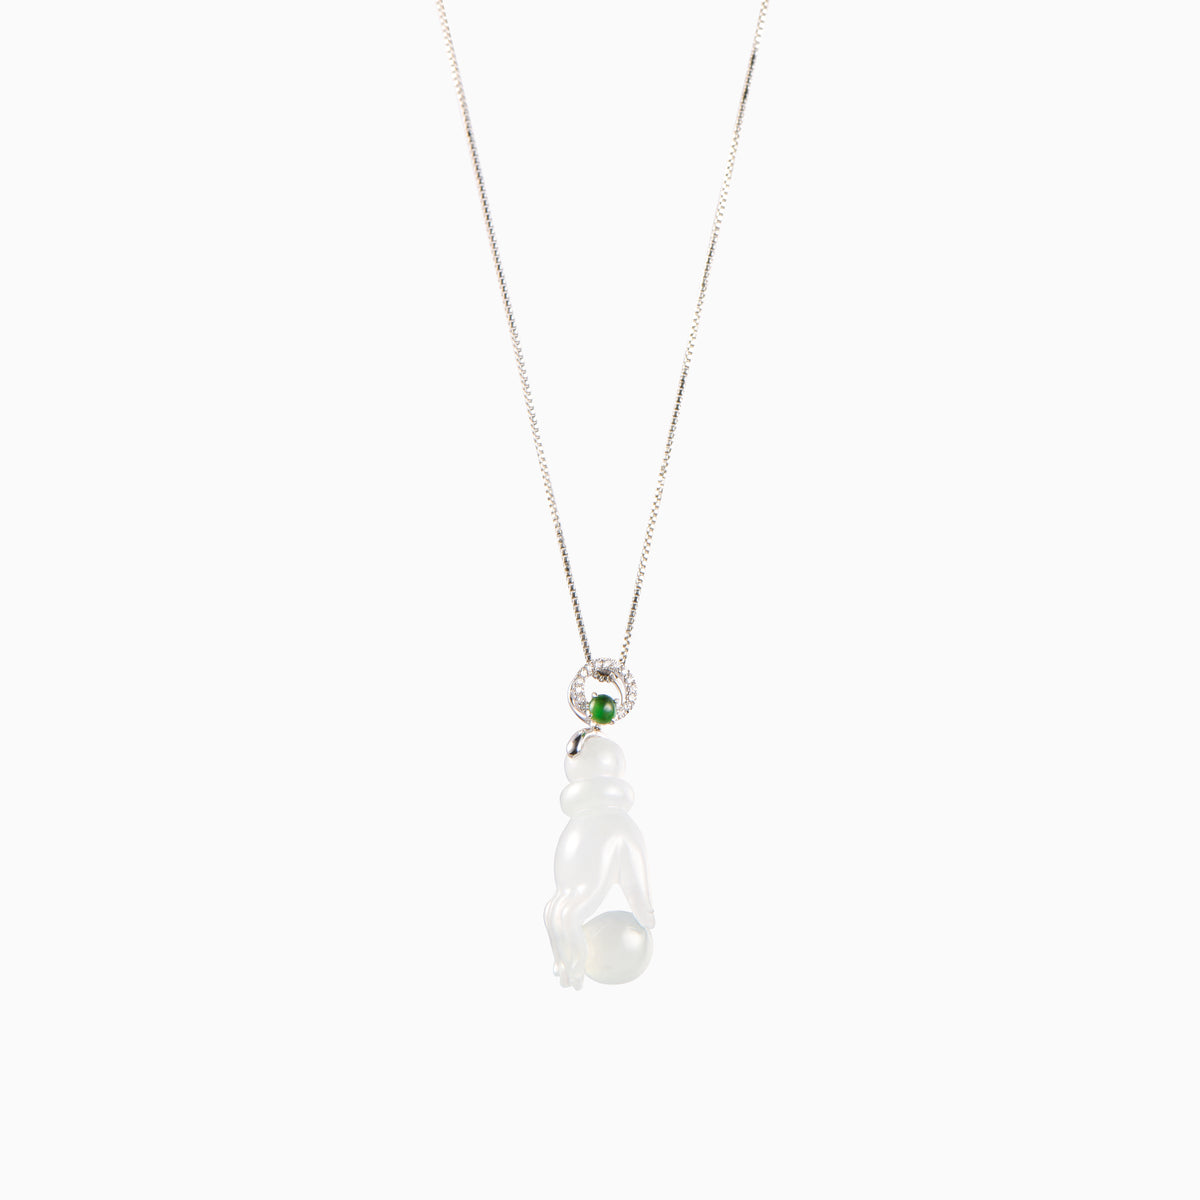 White jade buddha&#39;s hand pendant decorated with green jade and diamonds